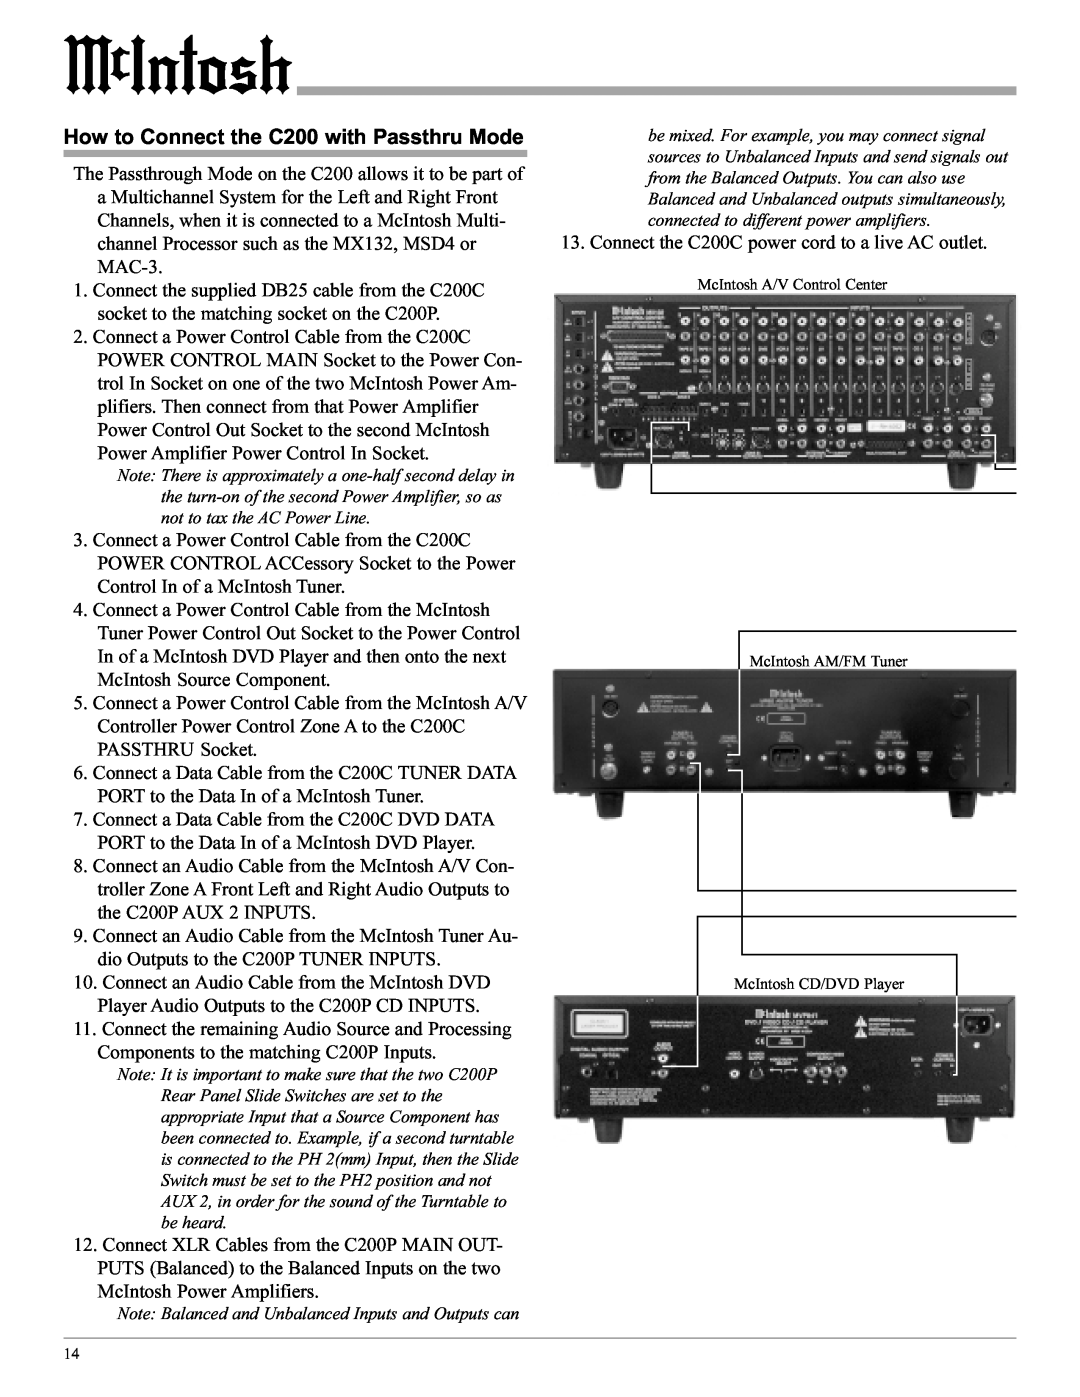 McIntosh manual How to Connect the C200 with Passthru Mode, McIntosh A/V Control Center McIntosh AM/FM Tuner 